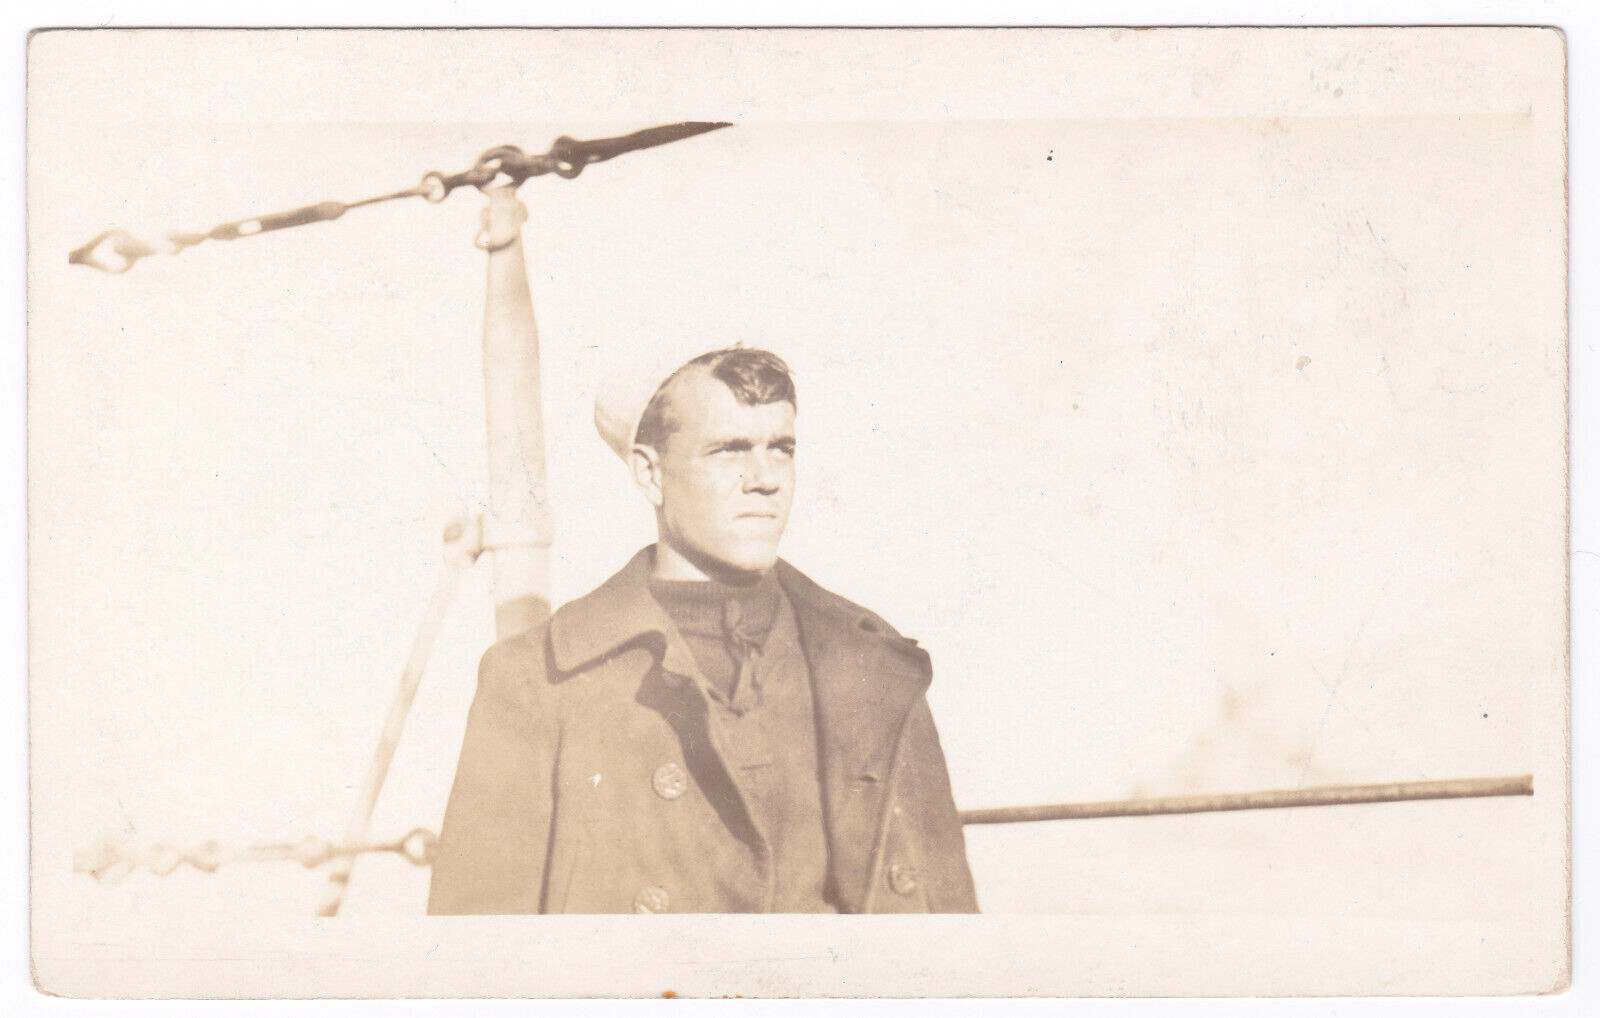 WW1 WWI Era Sailor Overcoat Hat Stern Looking On Deck Steel Cables RPPC Postcard